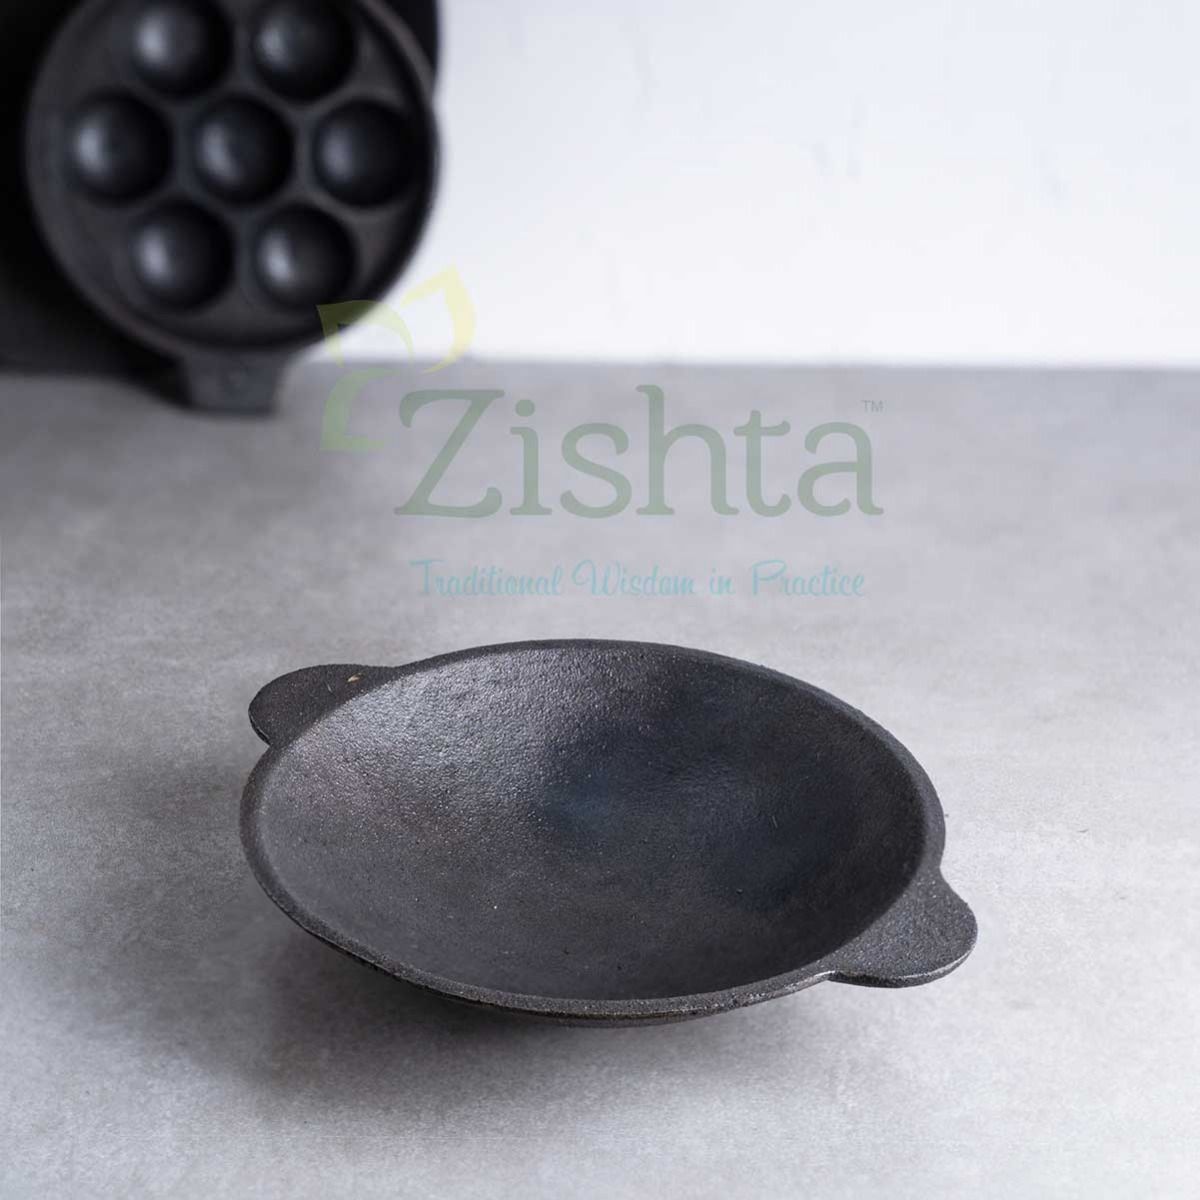 Cast Iron Appachatti-Zishta Traditional Cookware